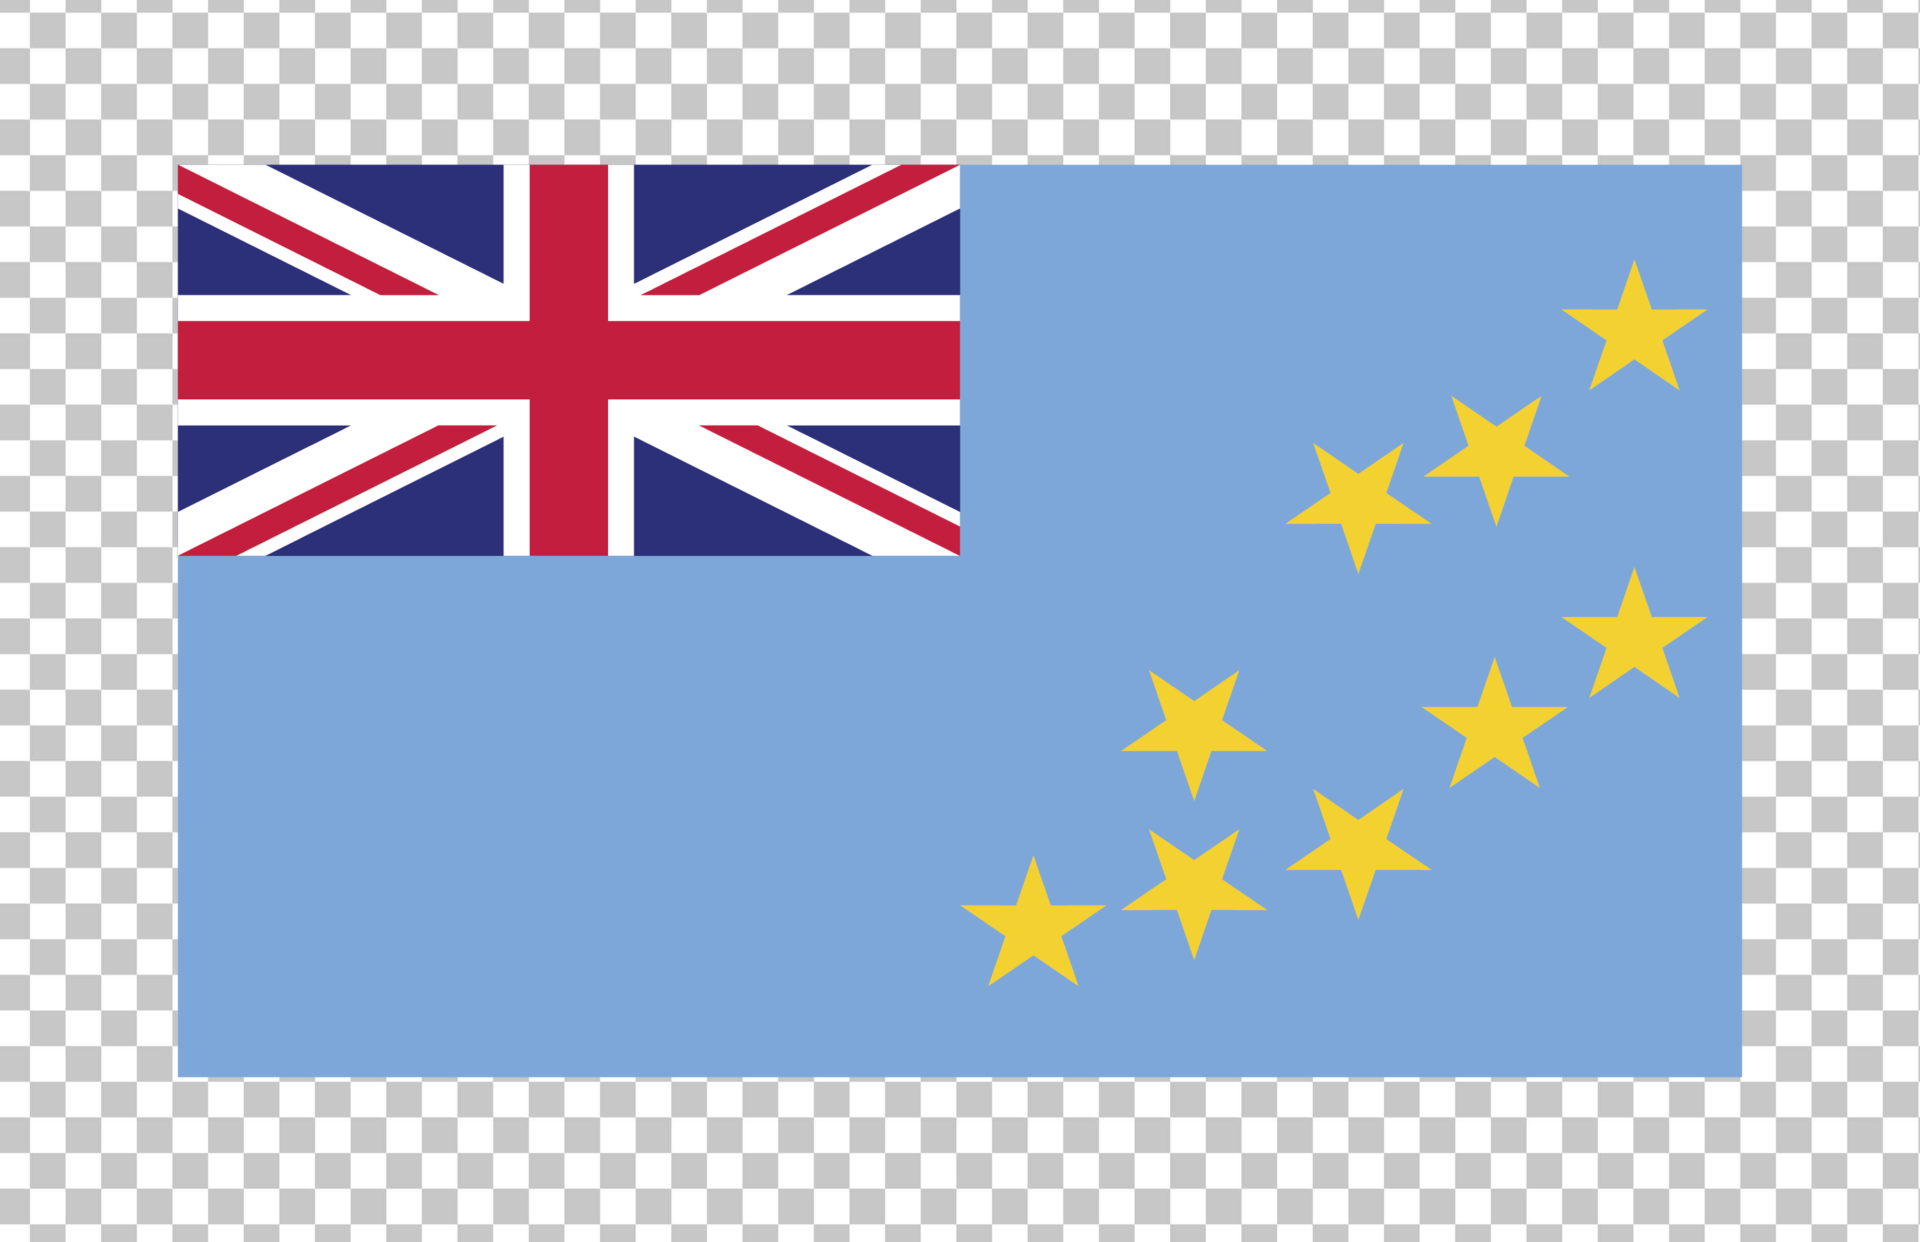 Flag of Tuvalu PNG Image